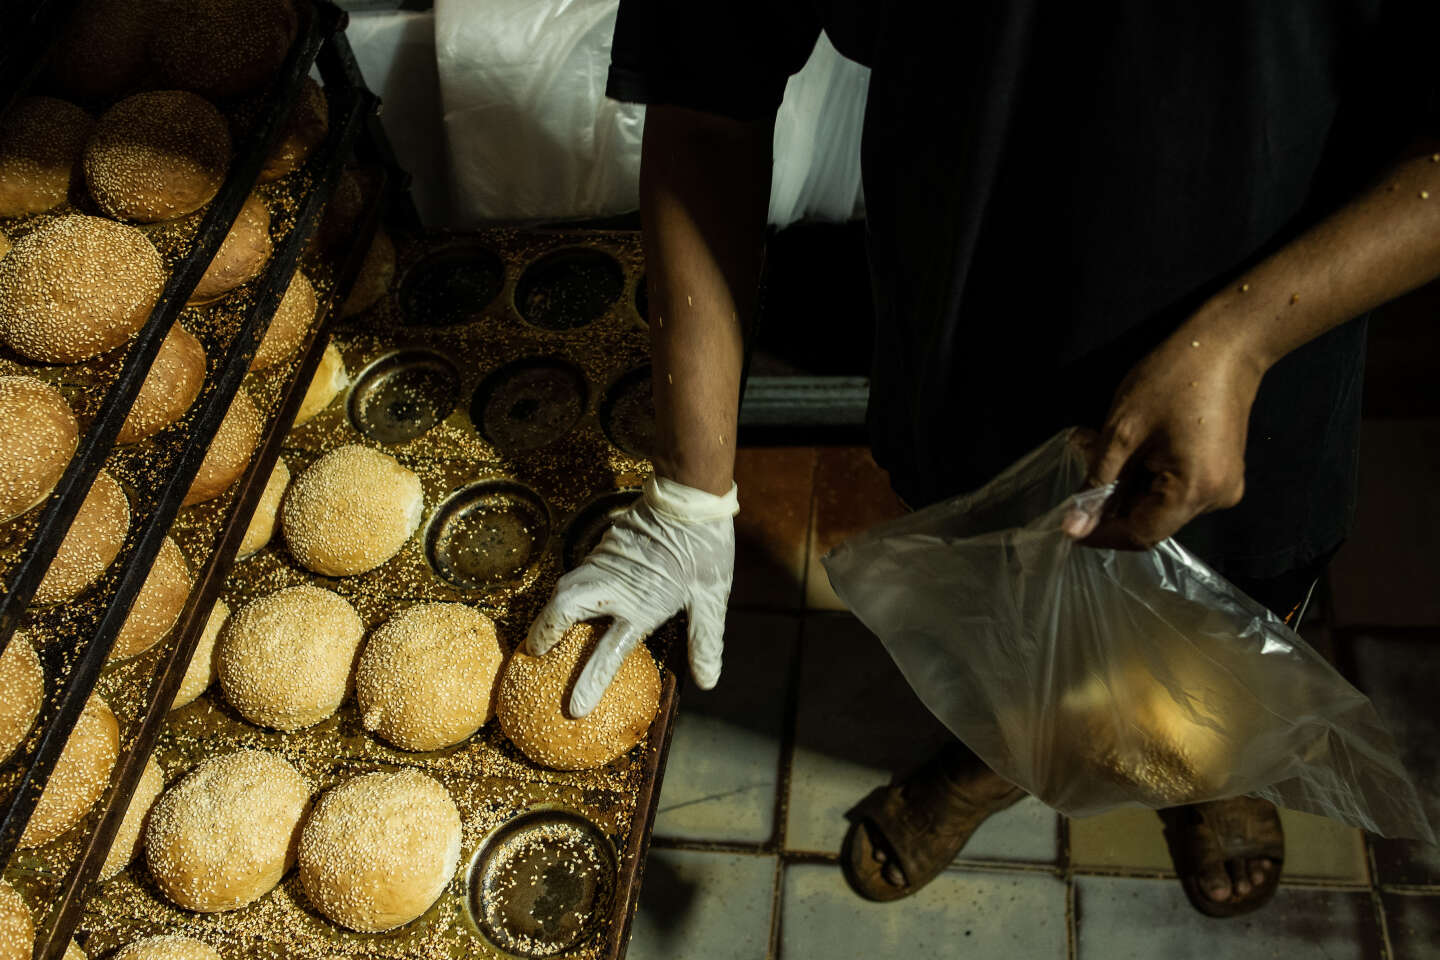 a Libyan baker as good as good bread